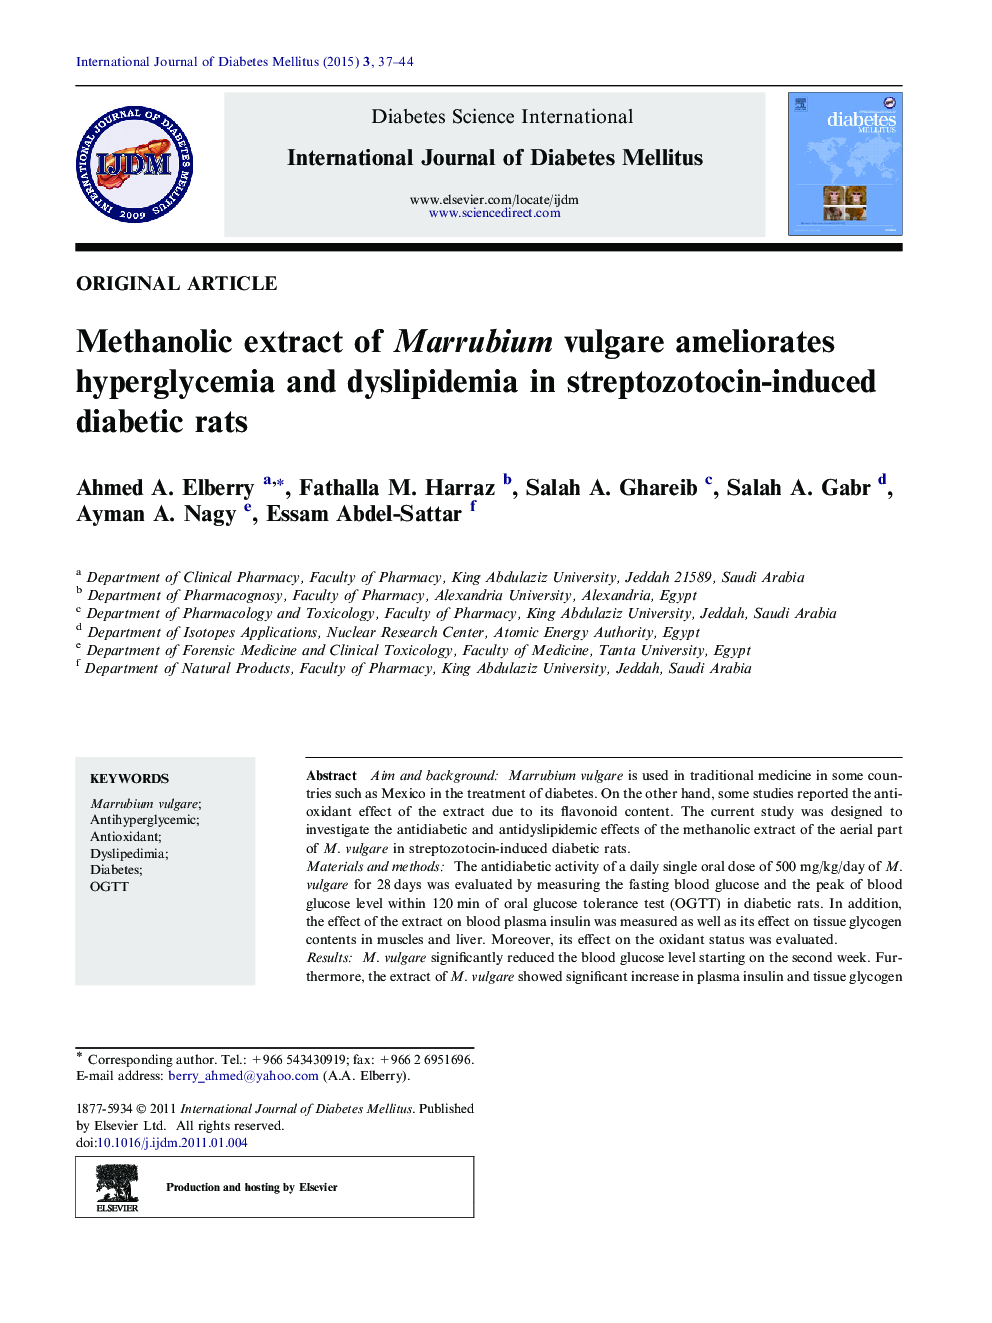 Methanolic extract of Marrubium vulgare ameliorates hyperglycemia and dyslipidemia in streptozotocin-induced diabetic rats